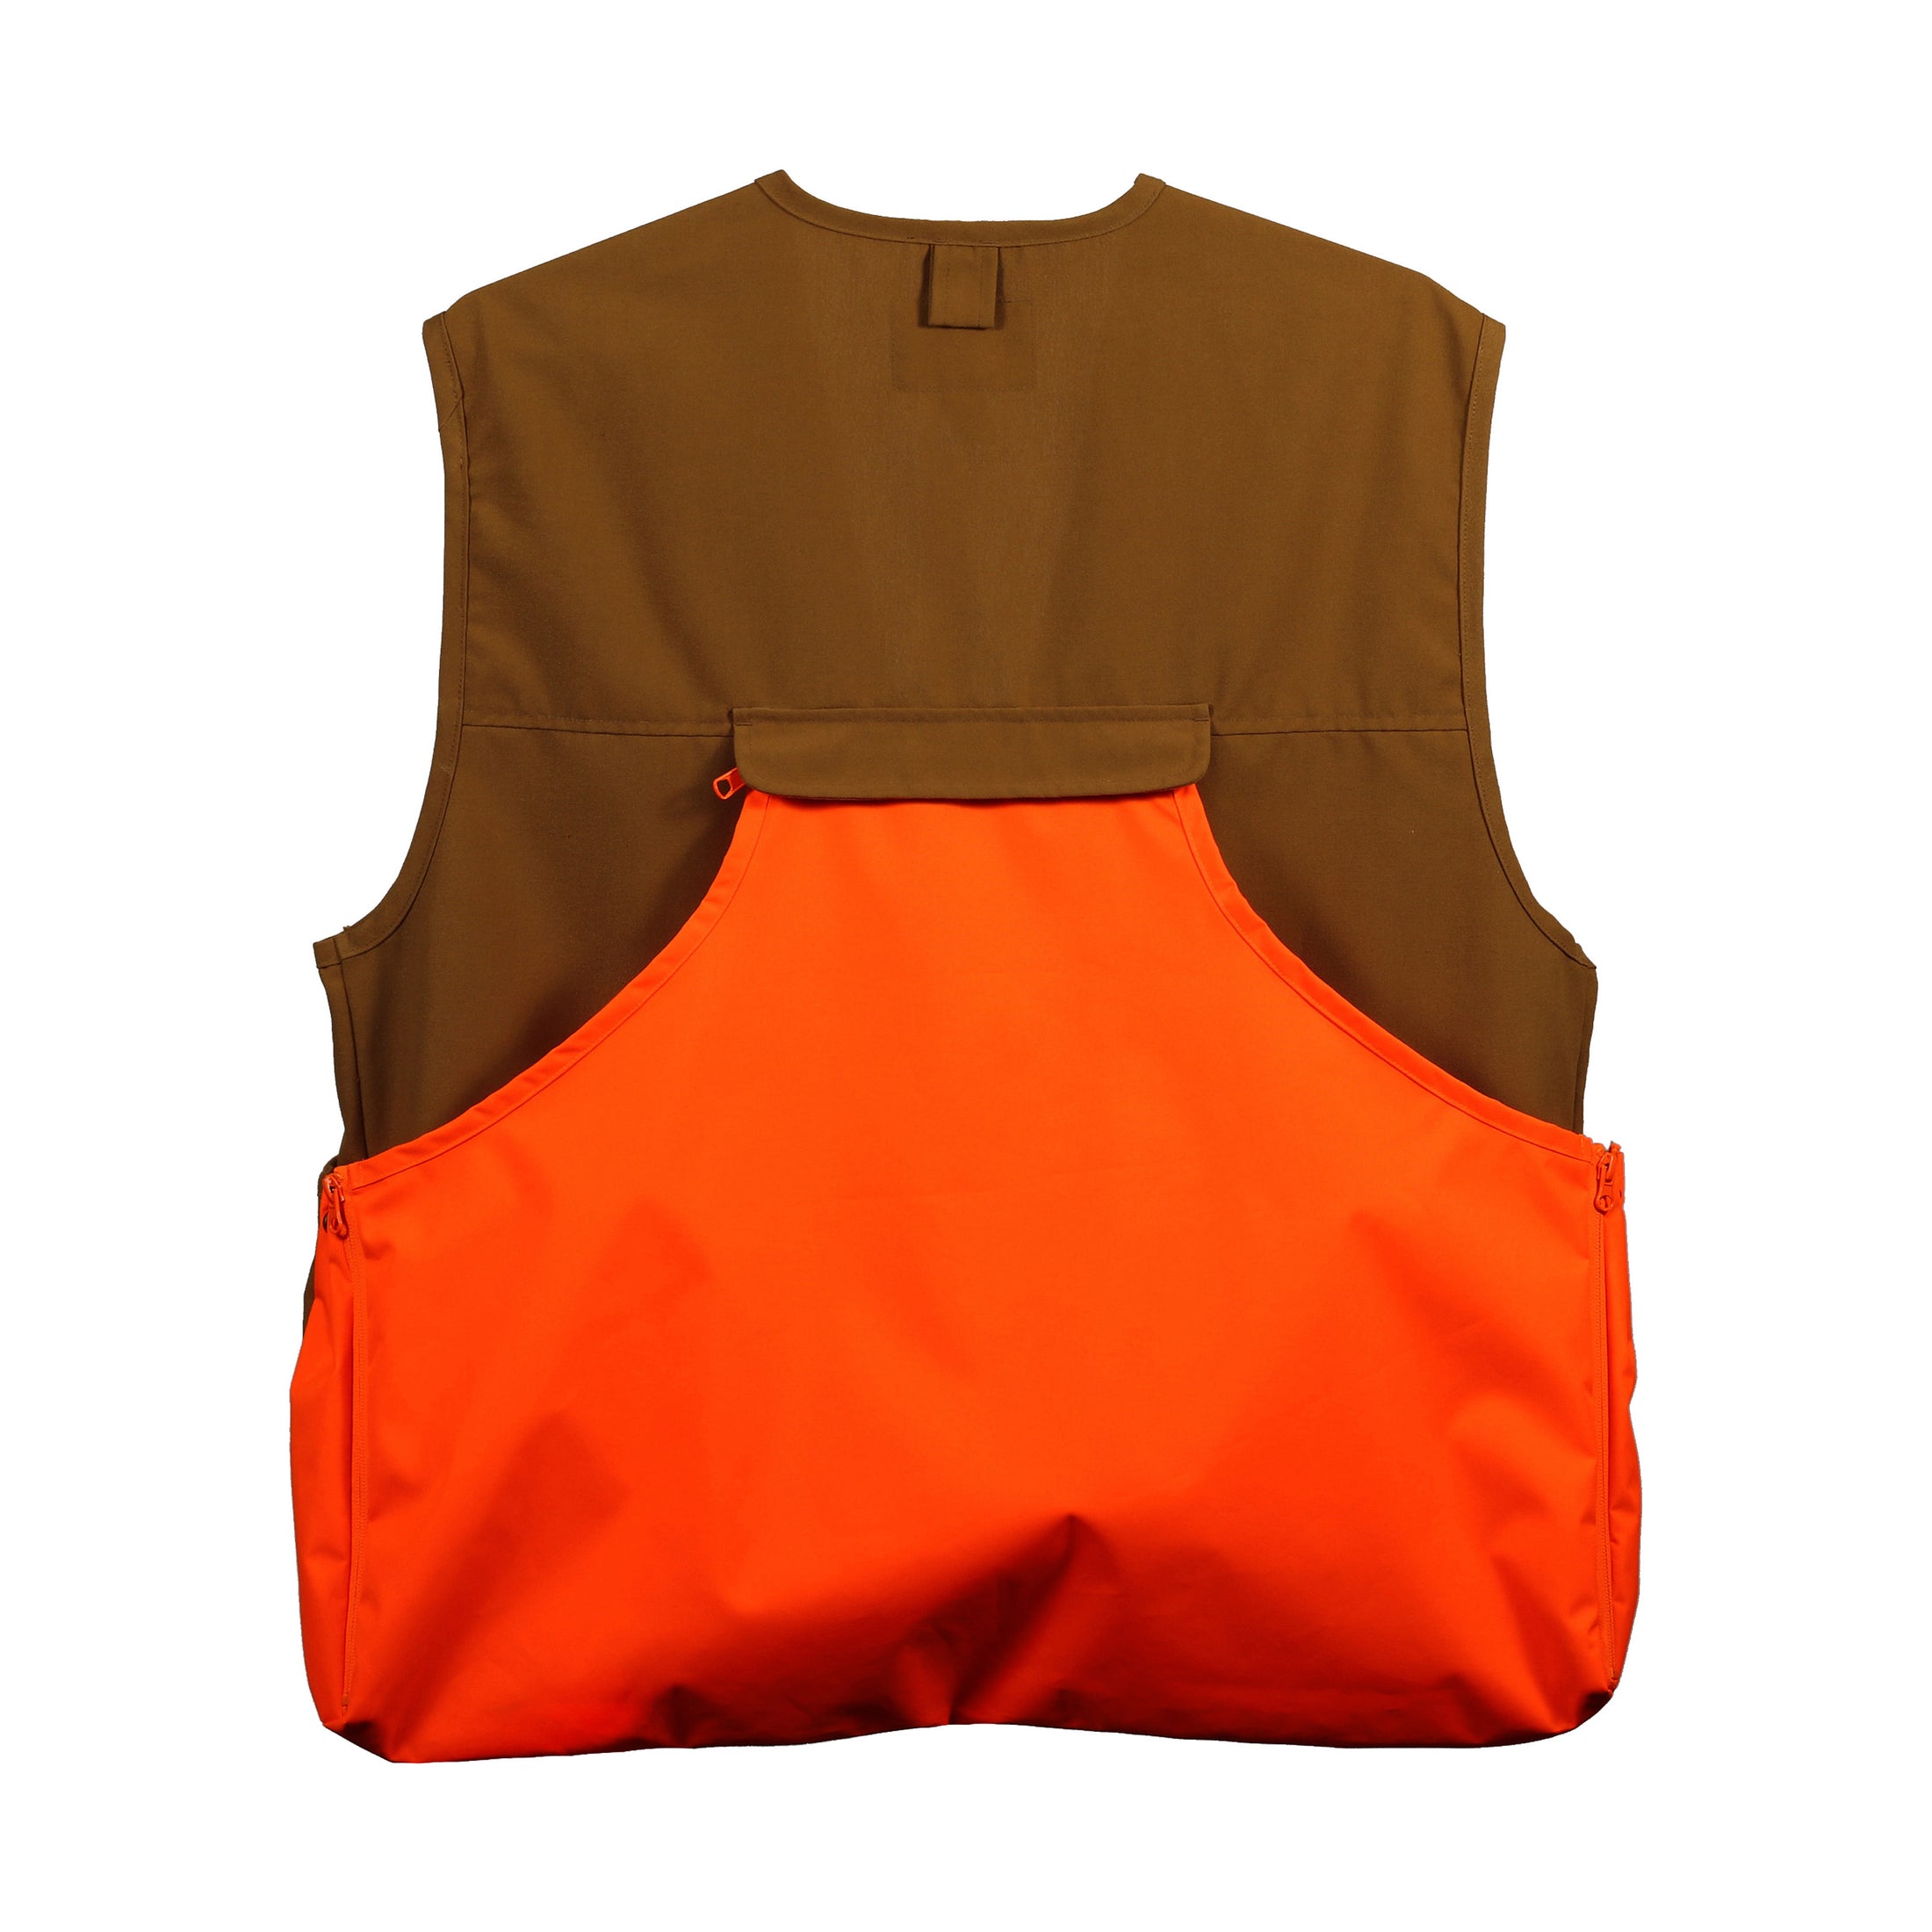 gamehide Outfitters Upland Vest back (marsh brown/orange)